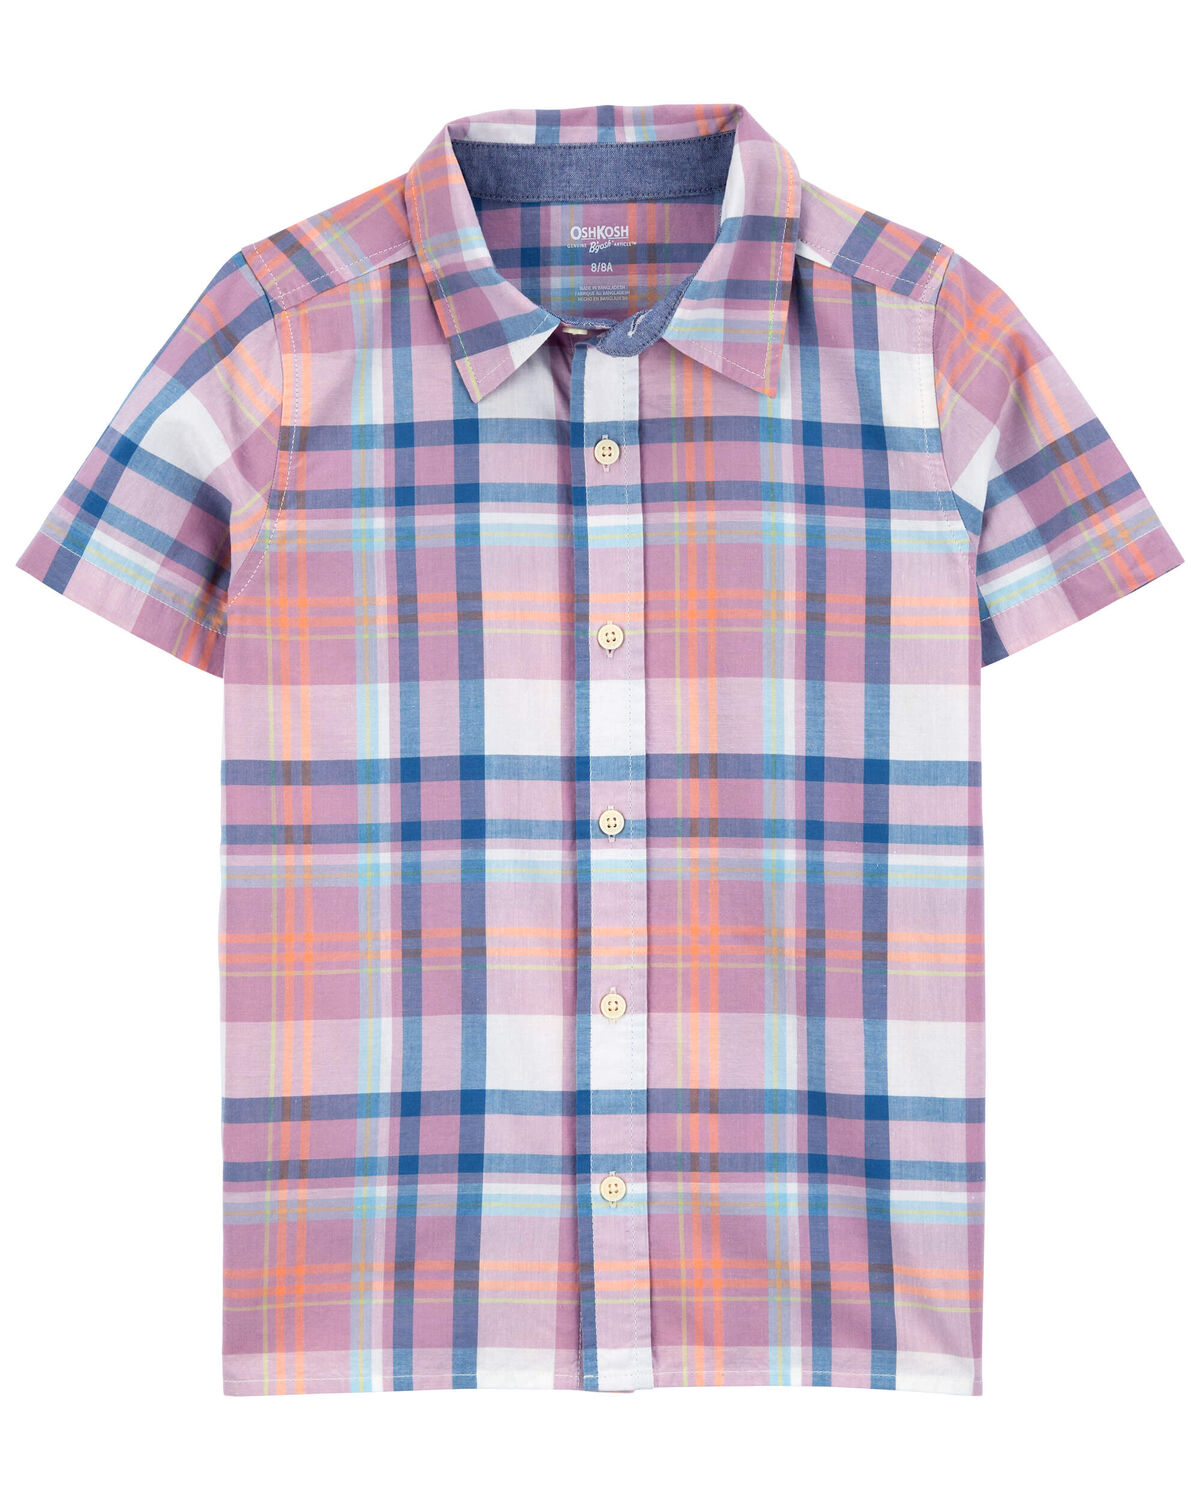 Kid Plaid Button-Front Short Sleeve Shirt